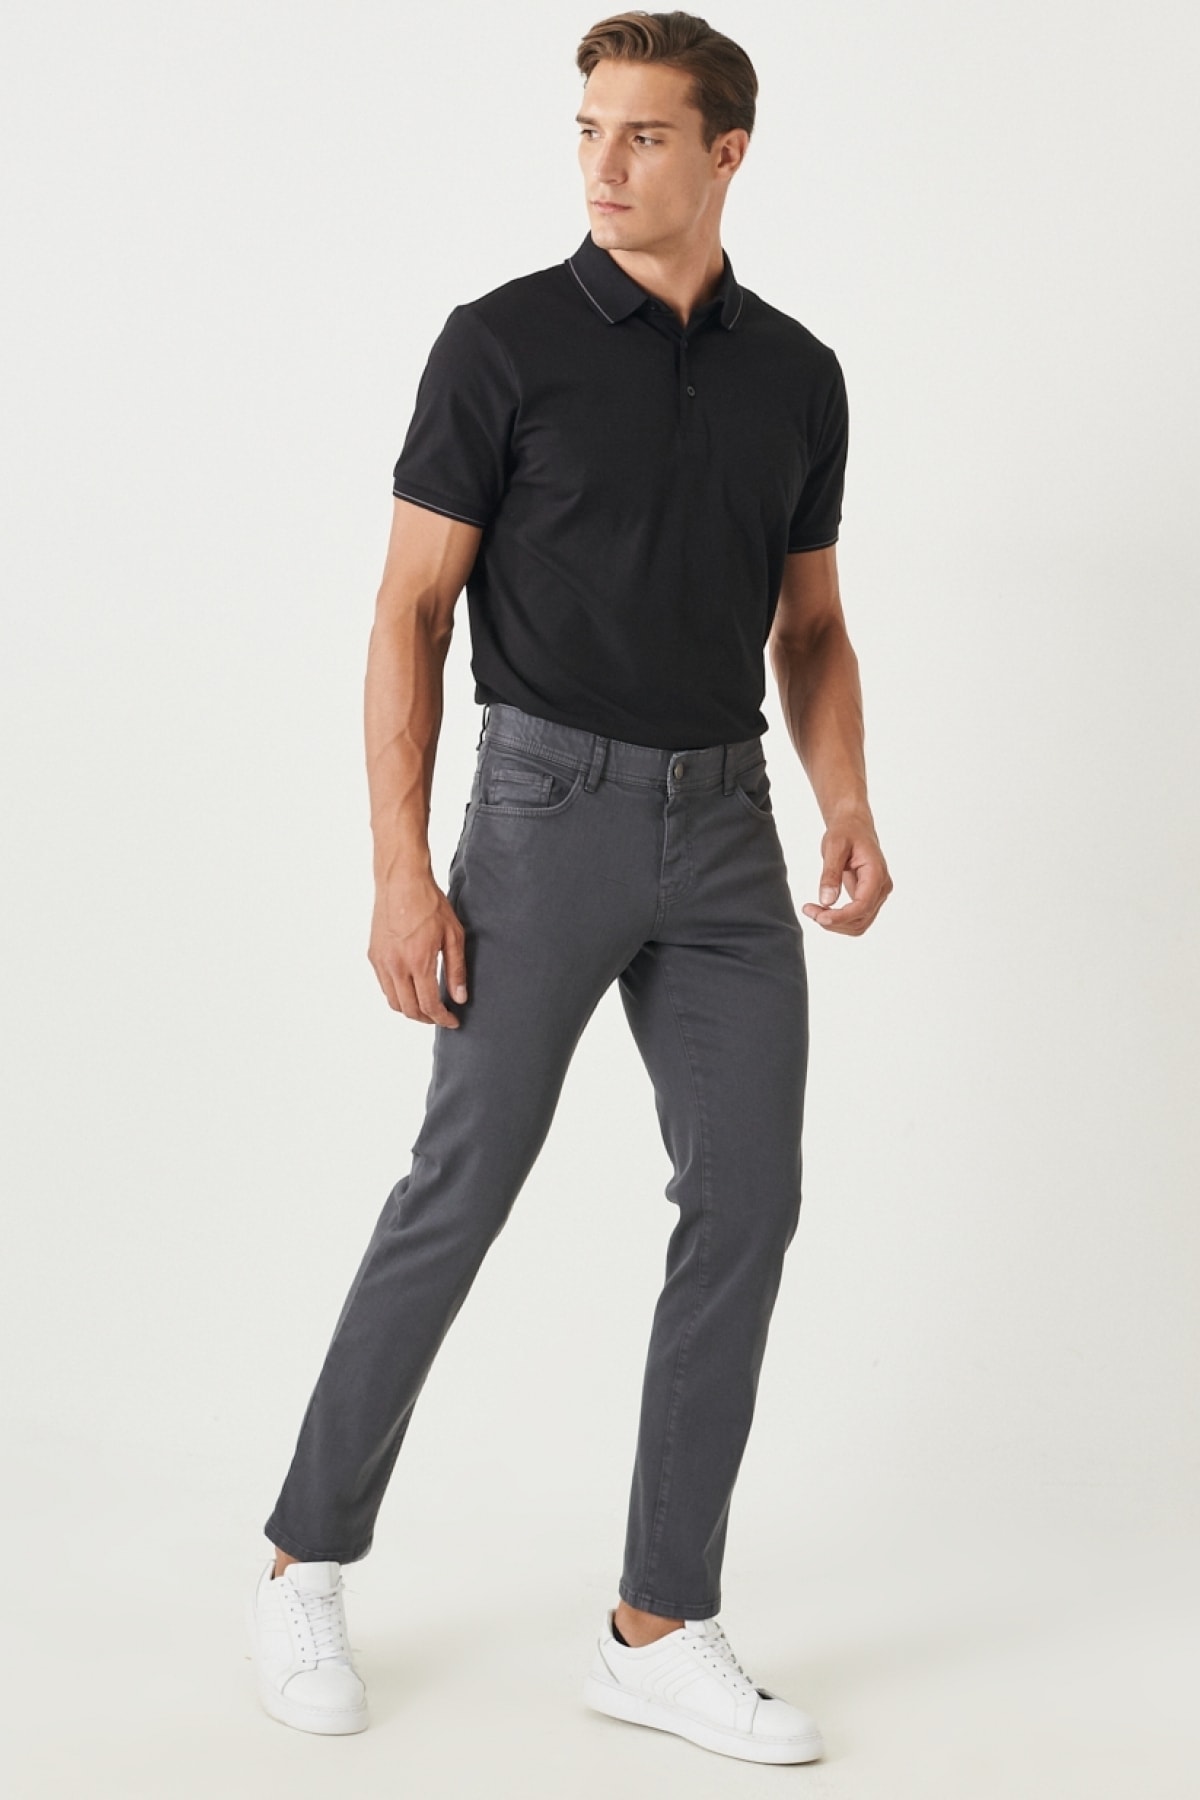 Levně ALTINYILDIZ CLASSICS Men's Anthracite 360 Degree Flexibility in All Directions. Comfortable Slim Fit Slim Fit Trousers.